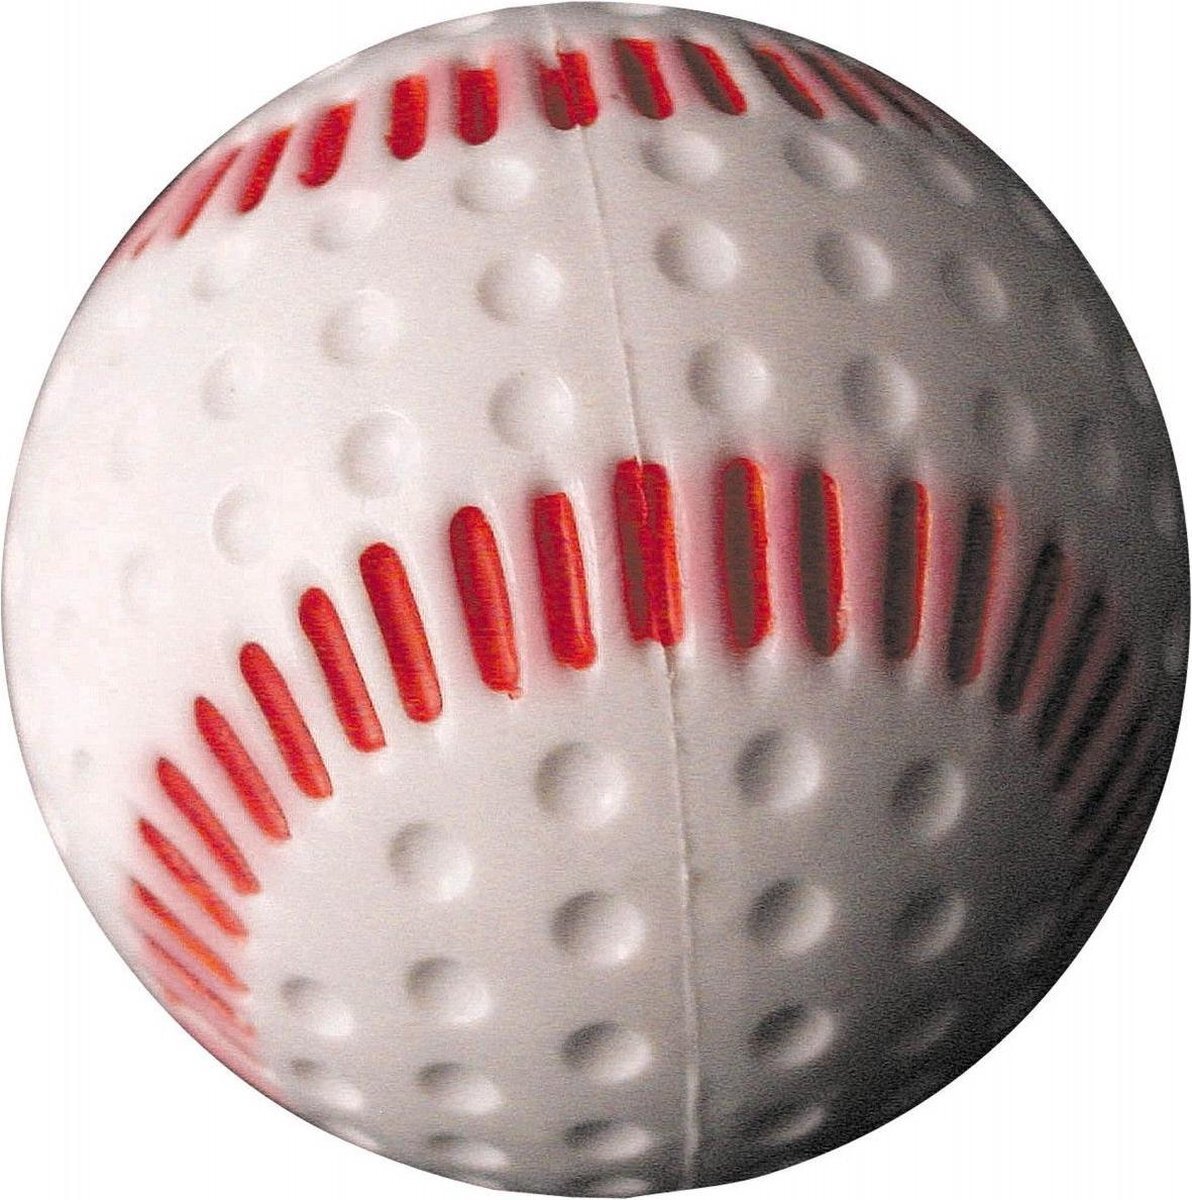 Baden Baden - Honkbal - MLB - Lichtgewicht - SBBR - Foam - Jeugd Honkbal - Wit/Rood - 9 inch